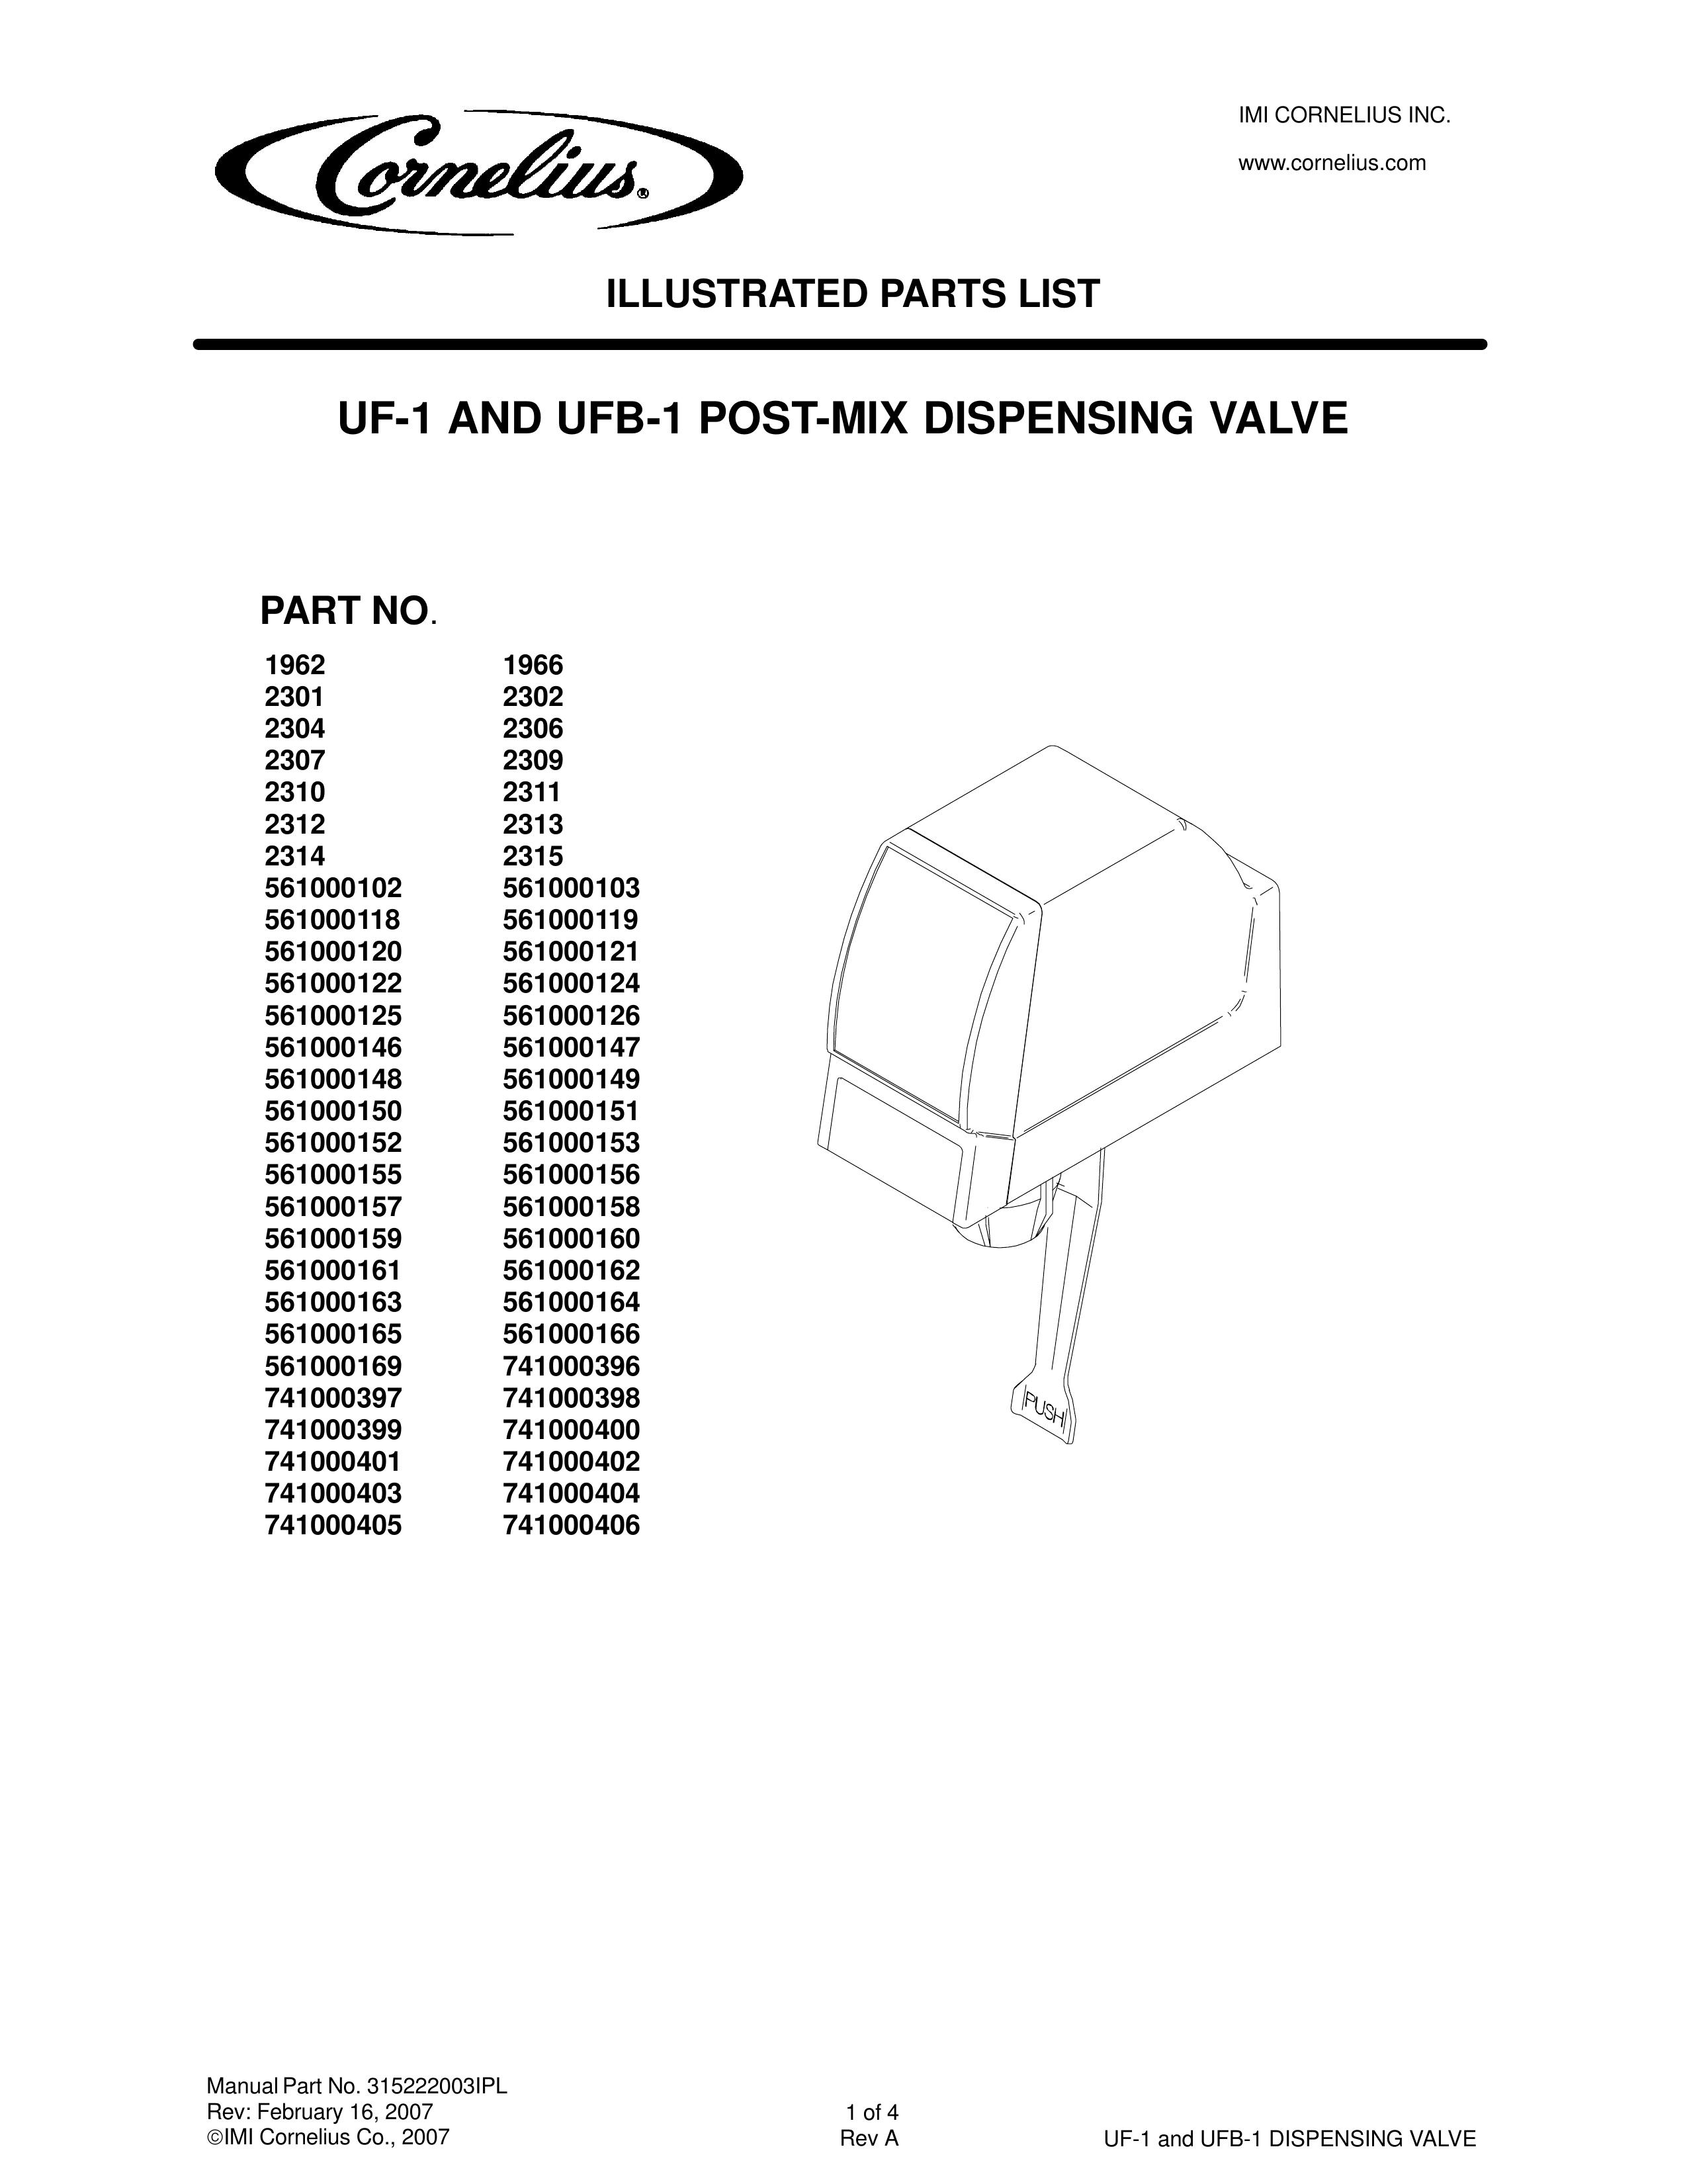 Panasonic UFB-1 Water Dispenser User Manual